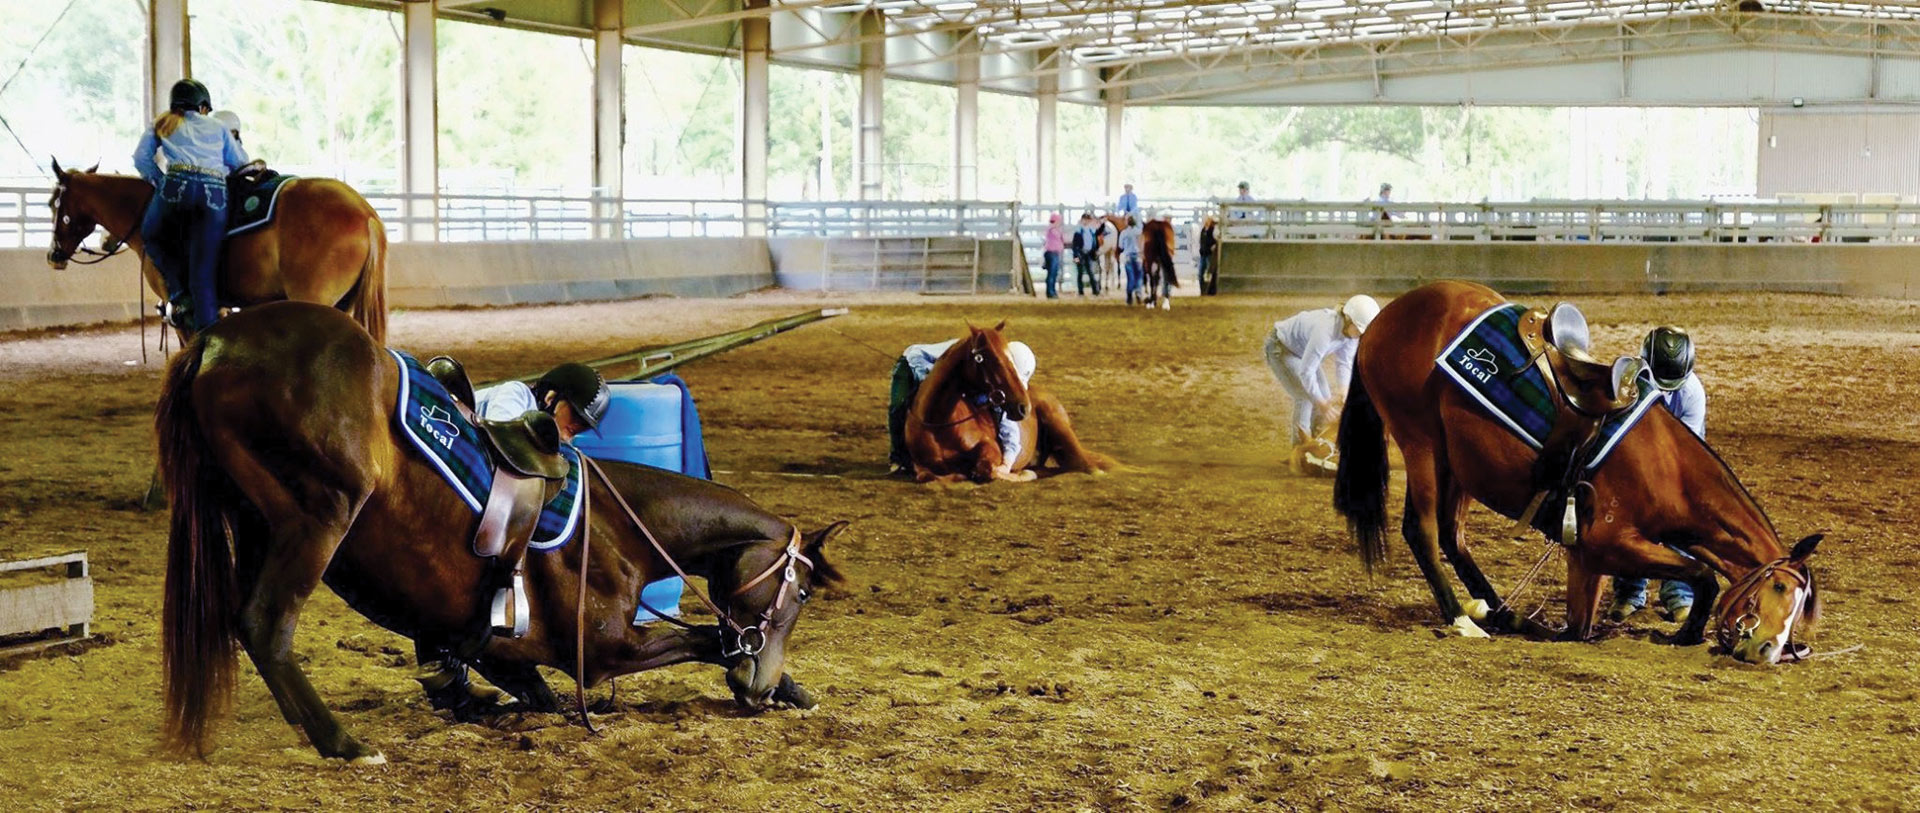 Students training horses